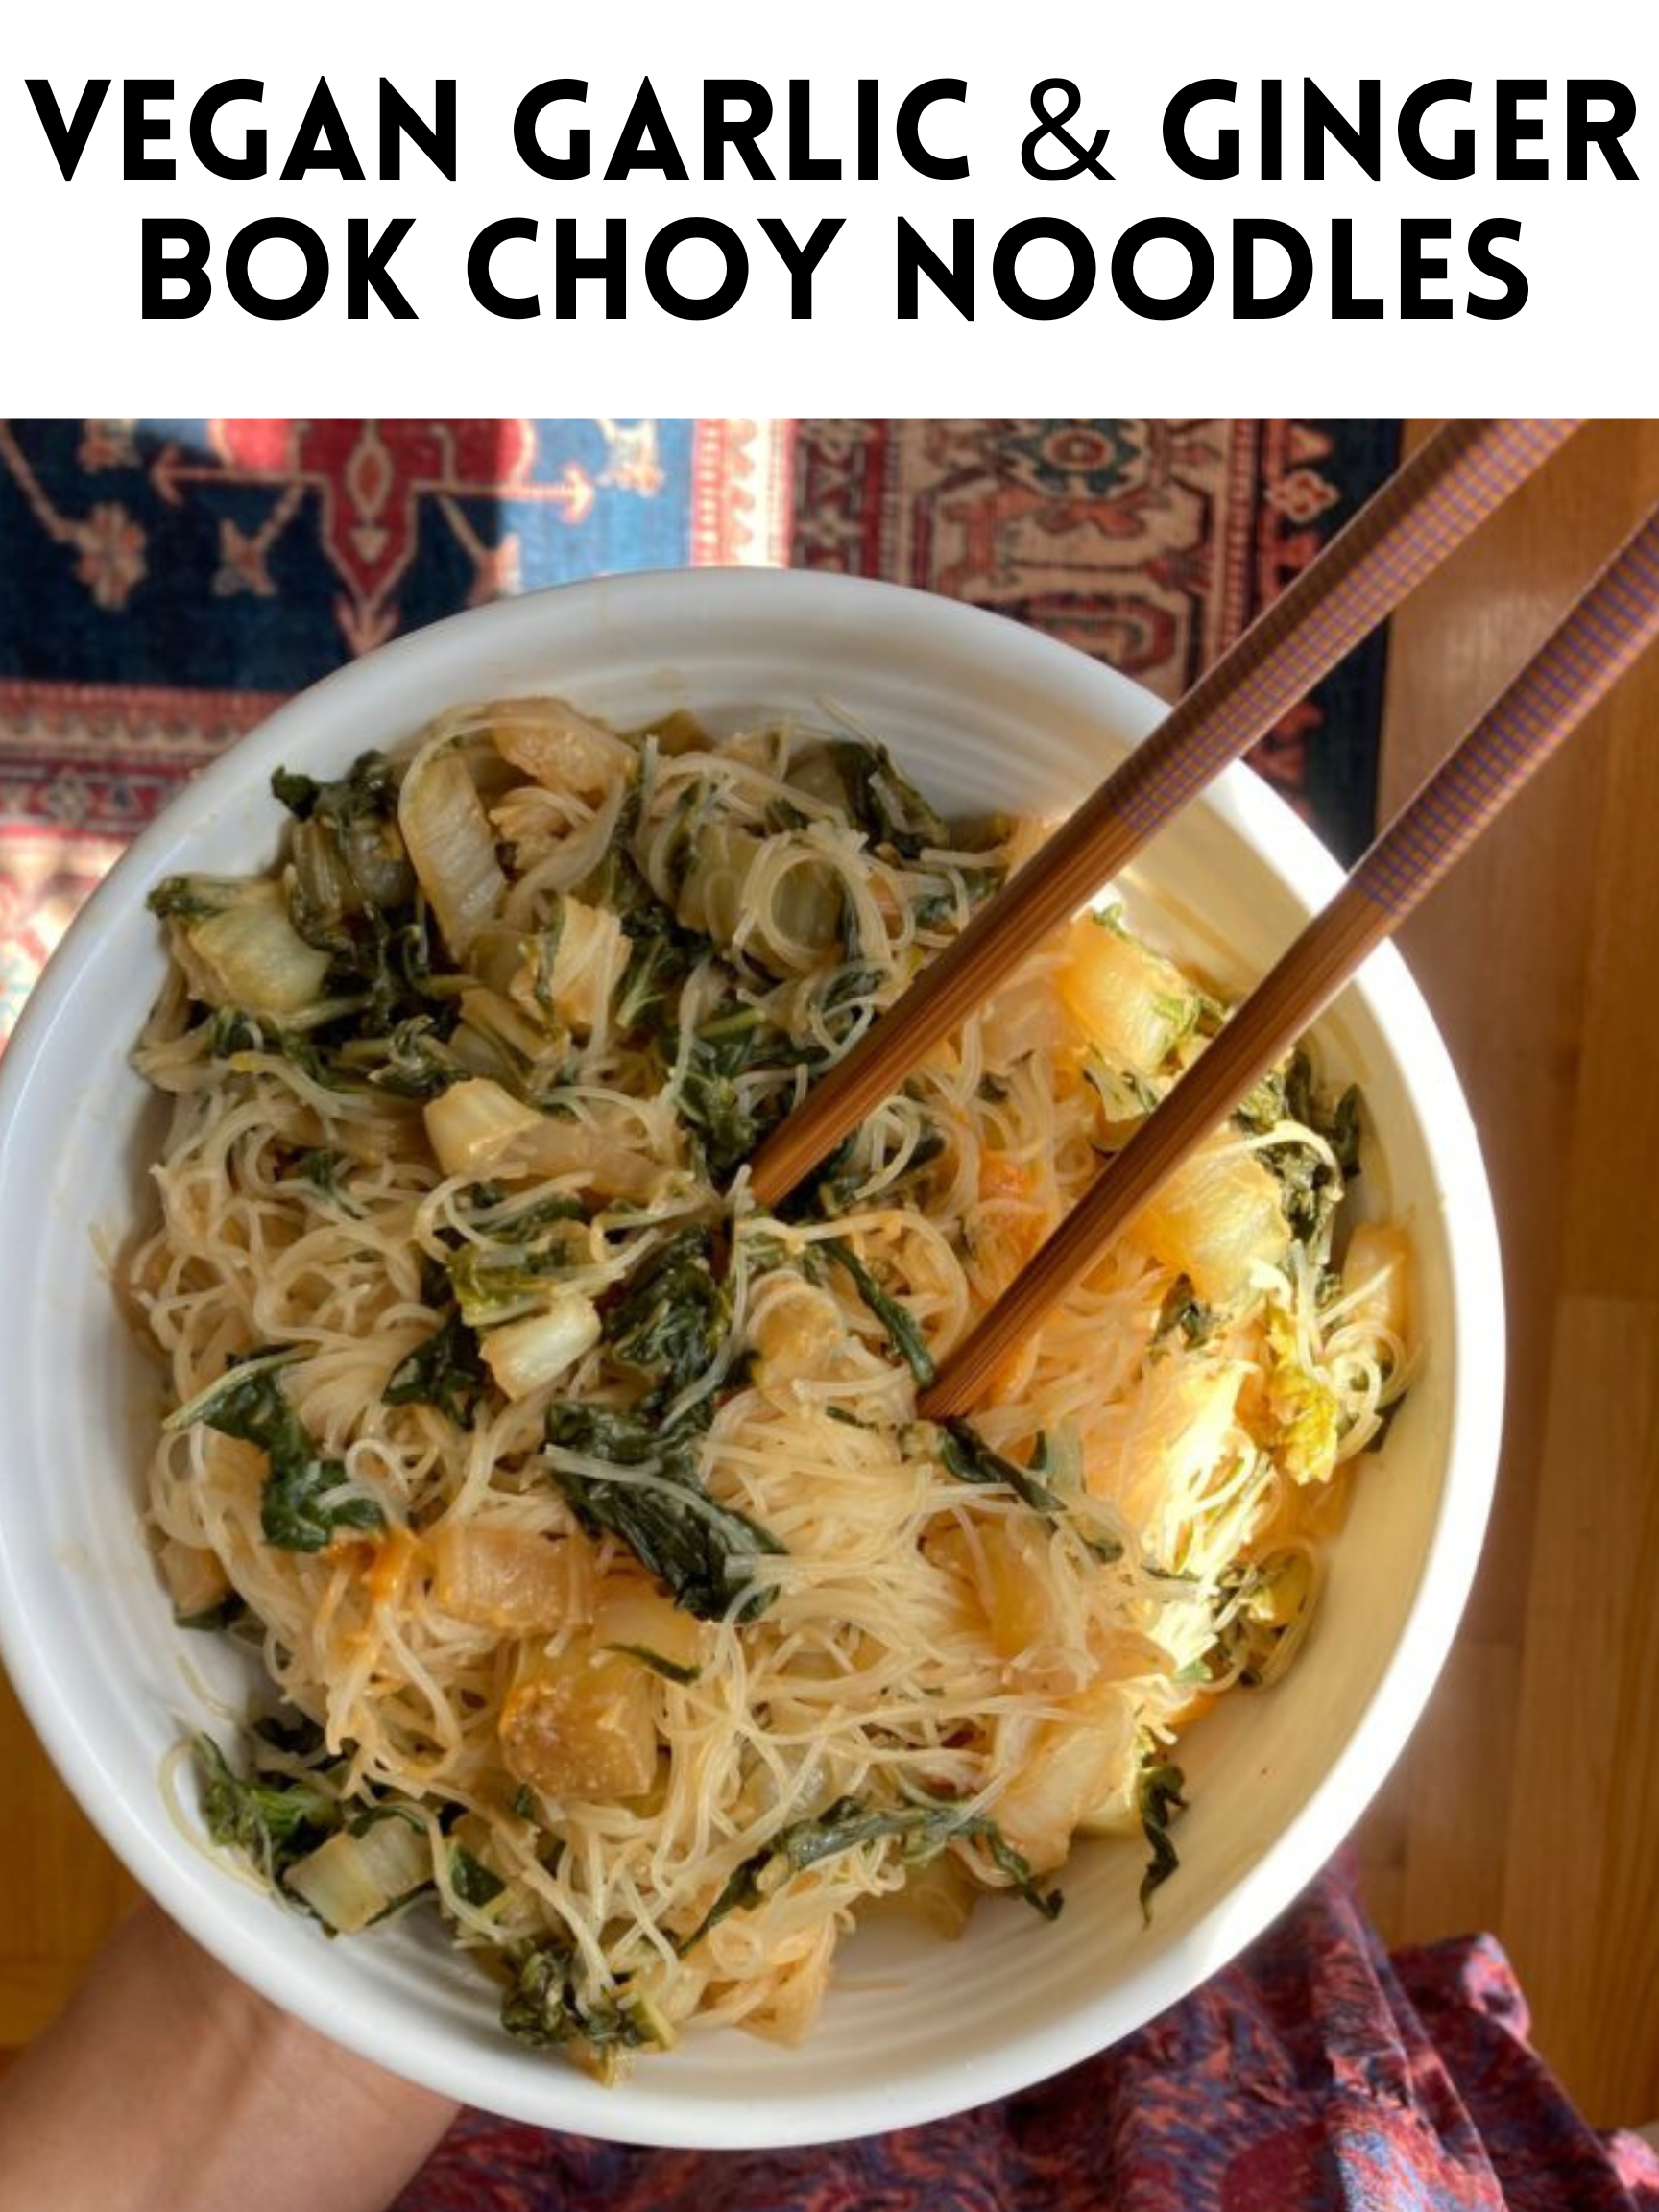 Garlic & Ginger Bok Choy Noodles (Vegan)